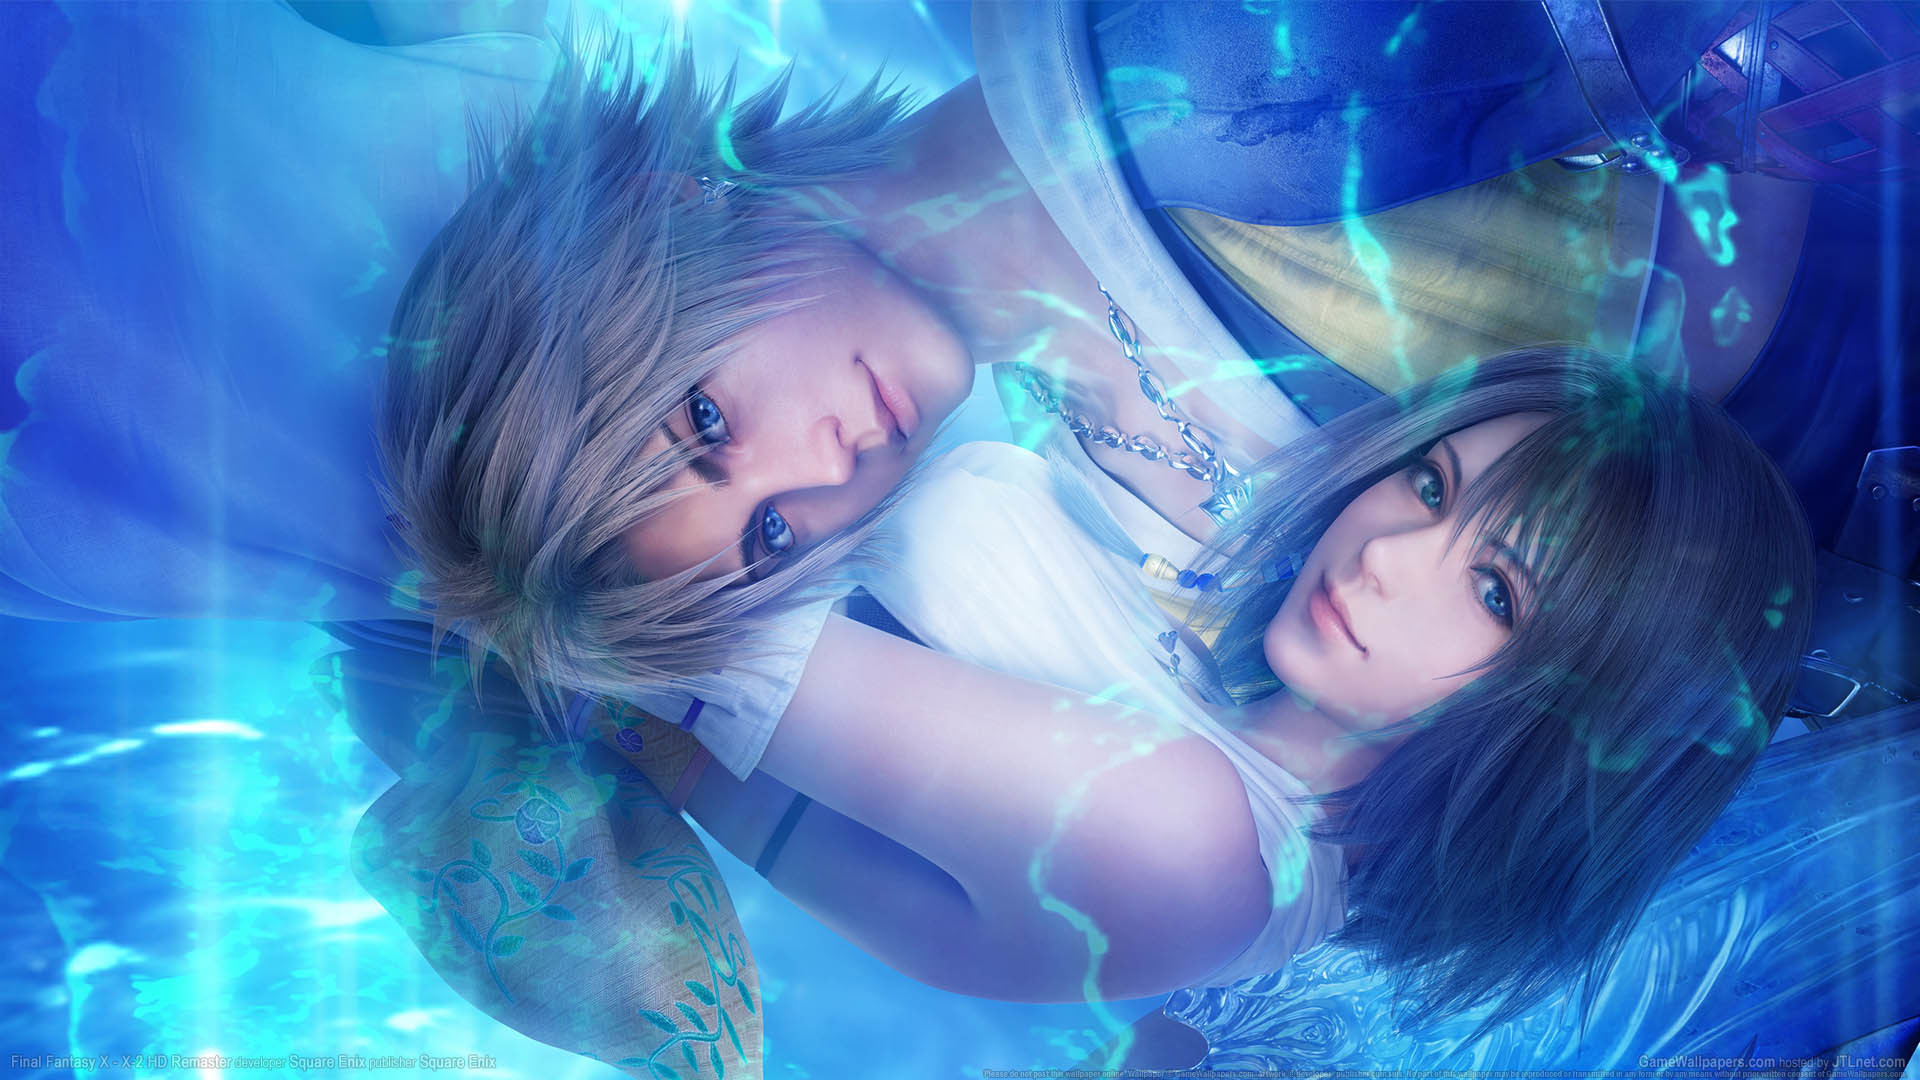 Final Fantasy X Wallpaper HD Image